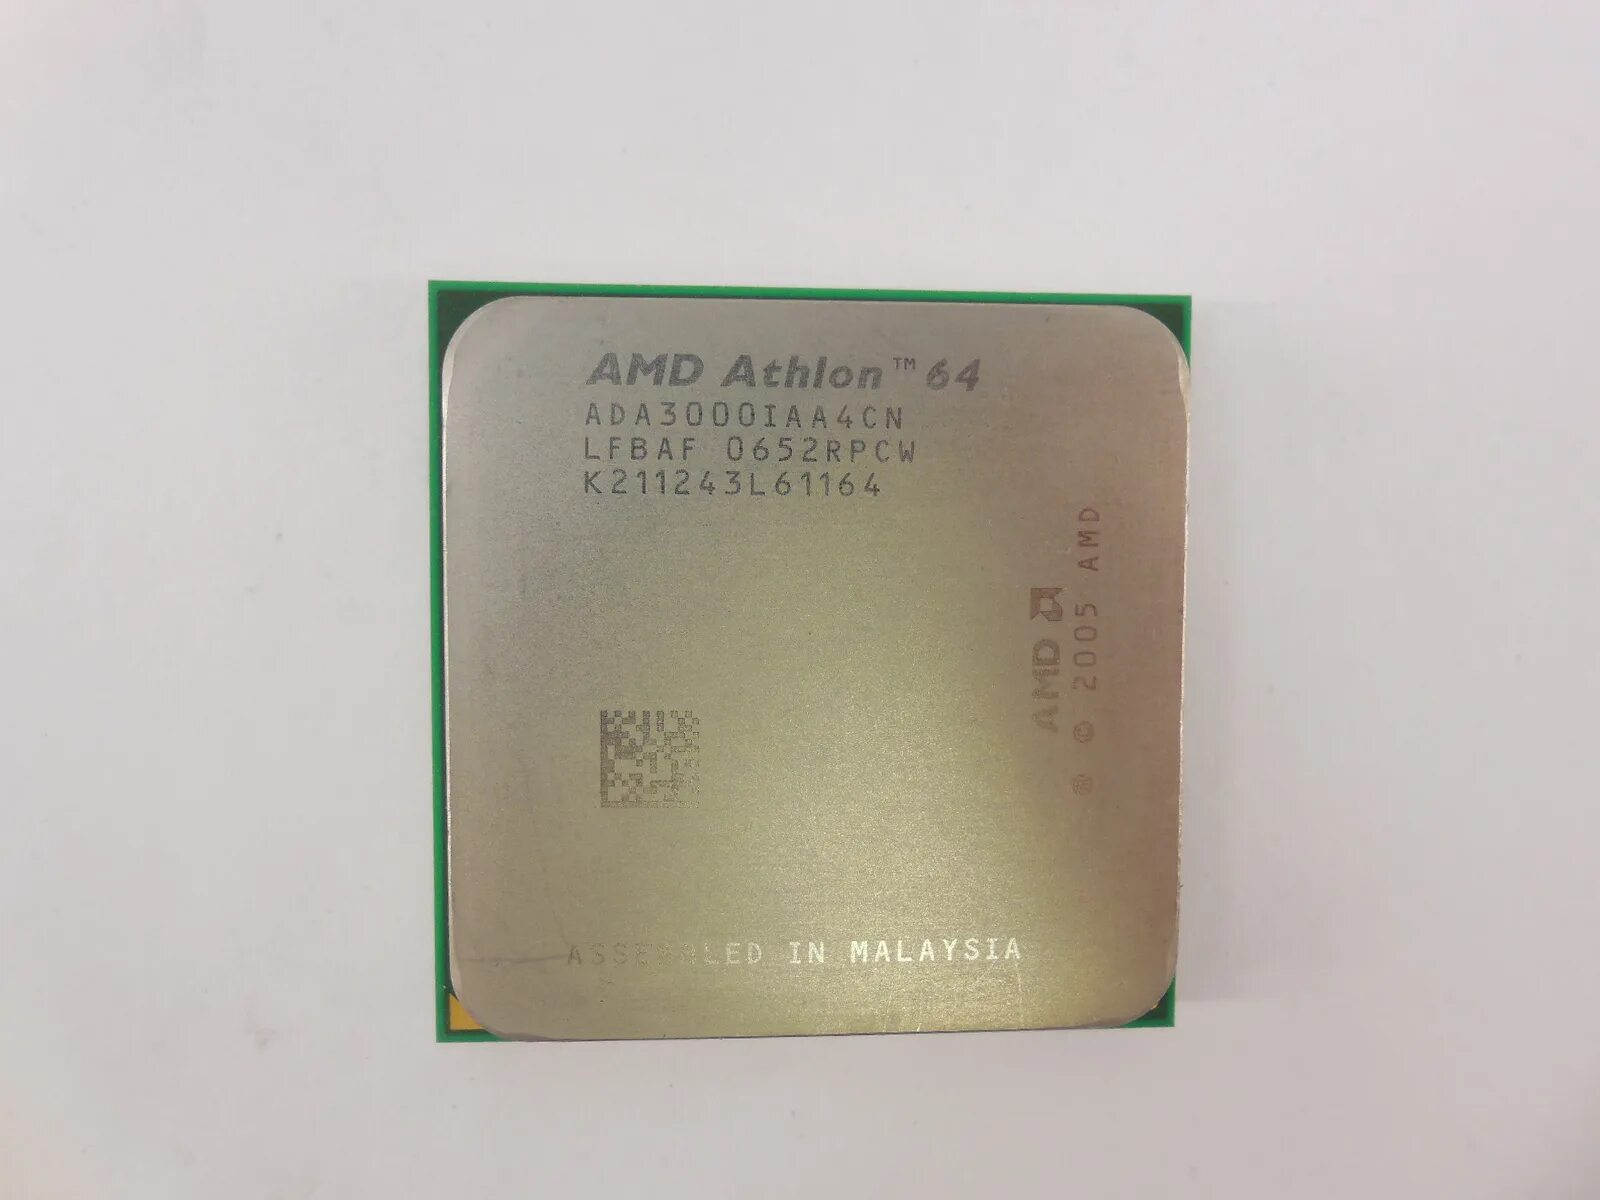 Athlon 64 купить. Athlon 64 сокет. AMD Athlon 64 3000+. Athlon 64 3000+ ada3000aep4ax. Процессор АМД ам2.